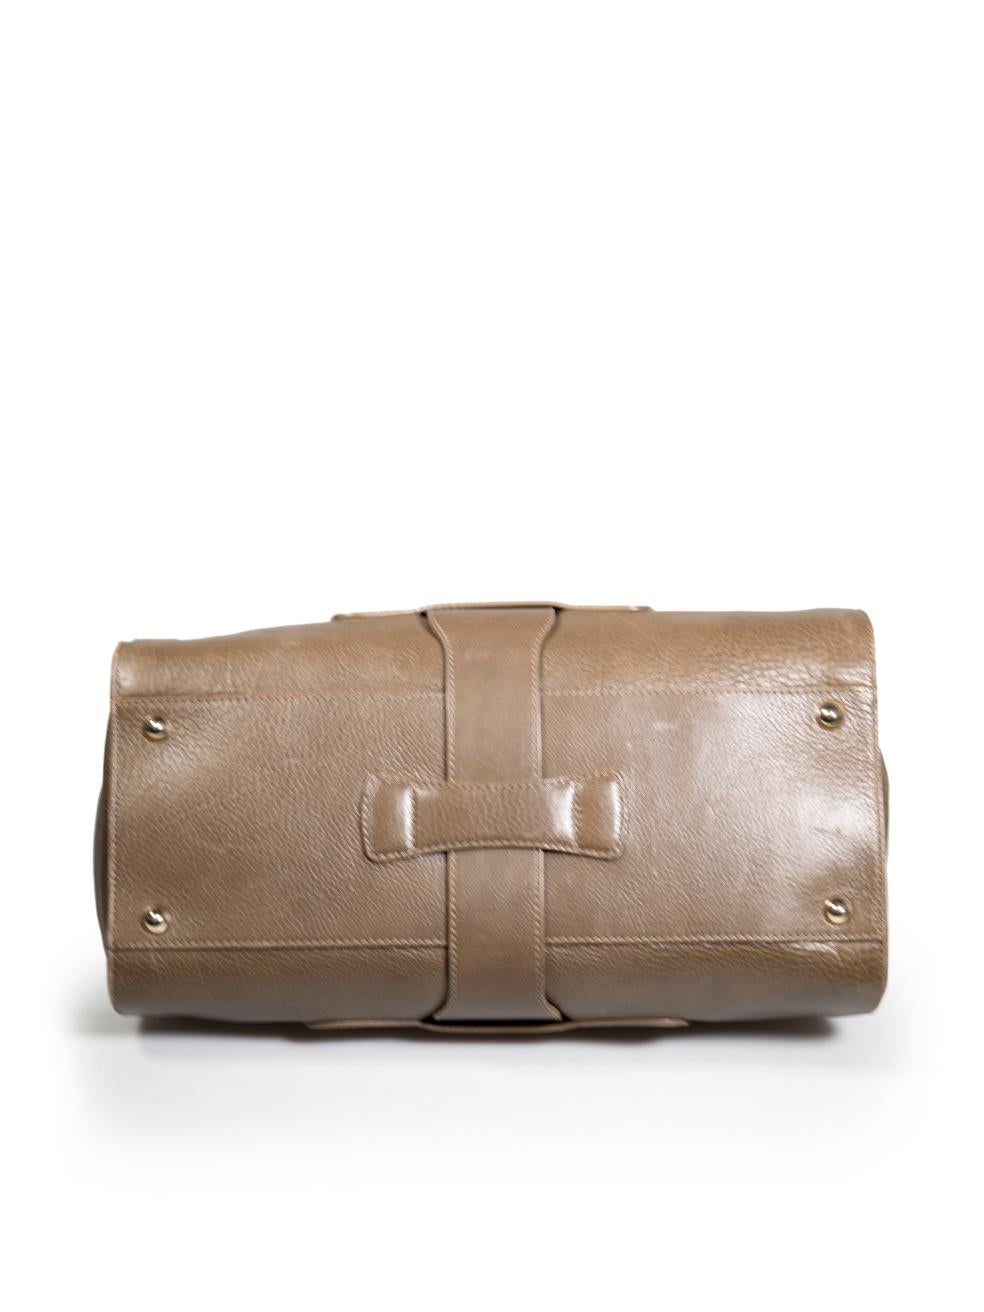 Women's Jimmy Choo Brown Leather Rosalie Satchel Bag